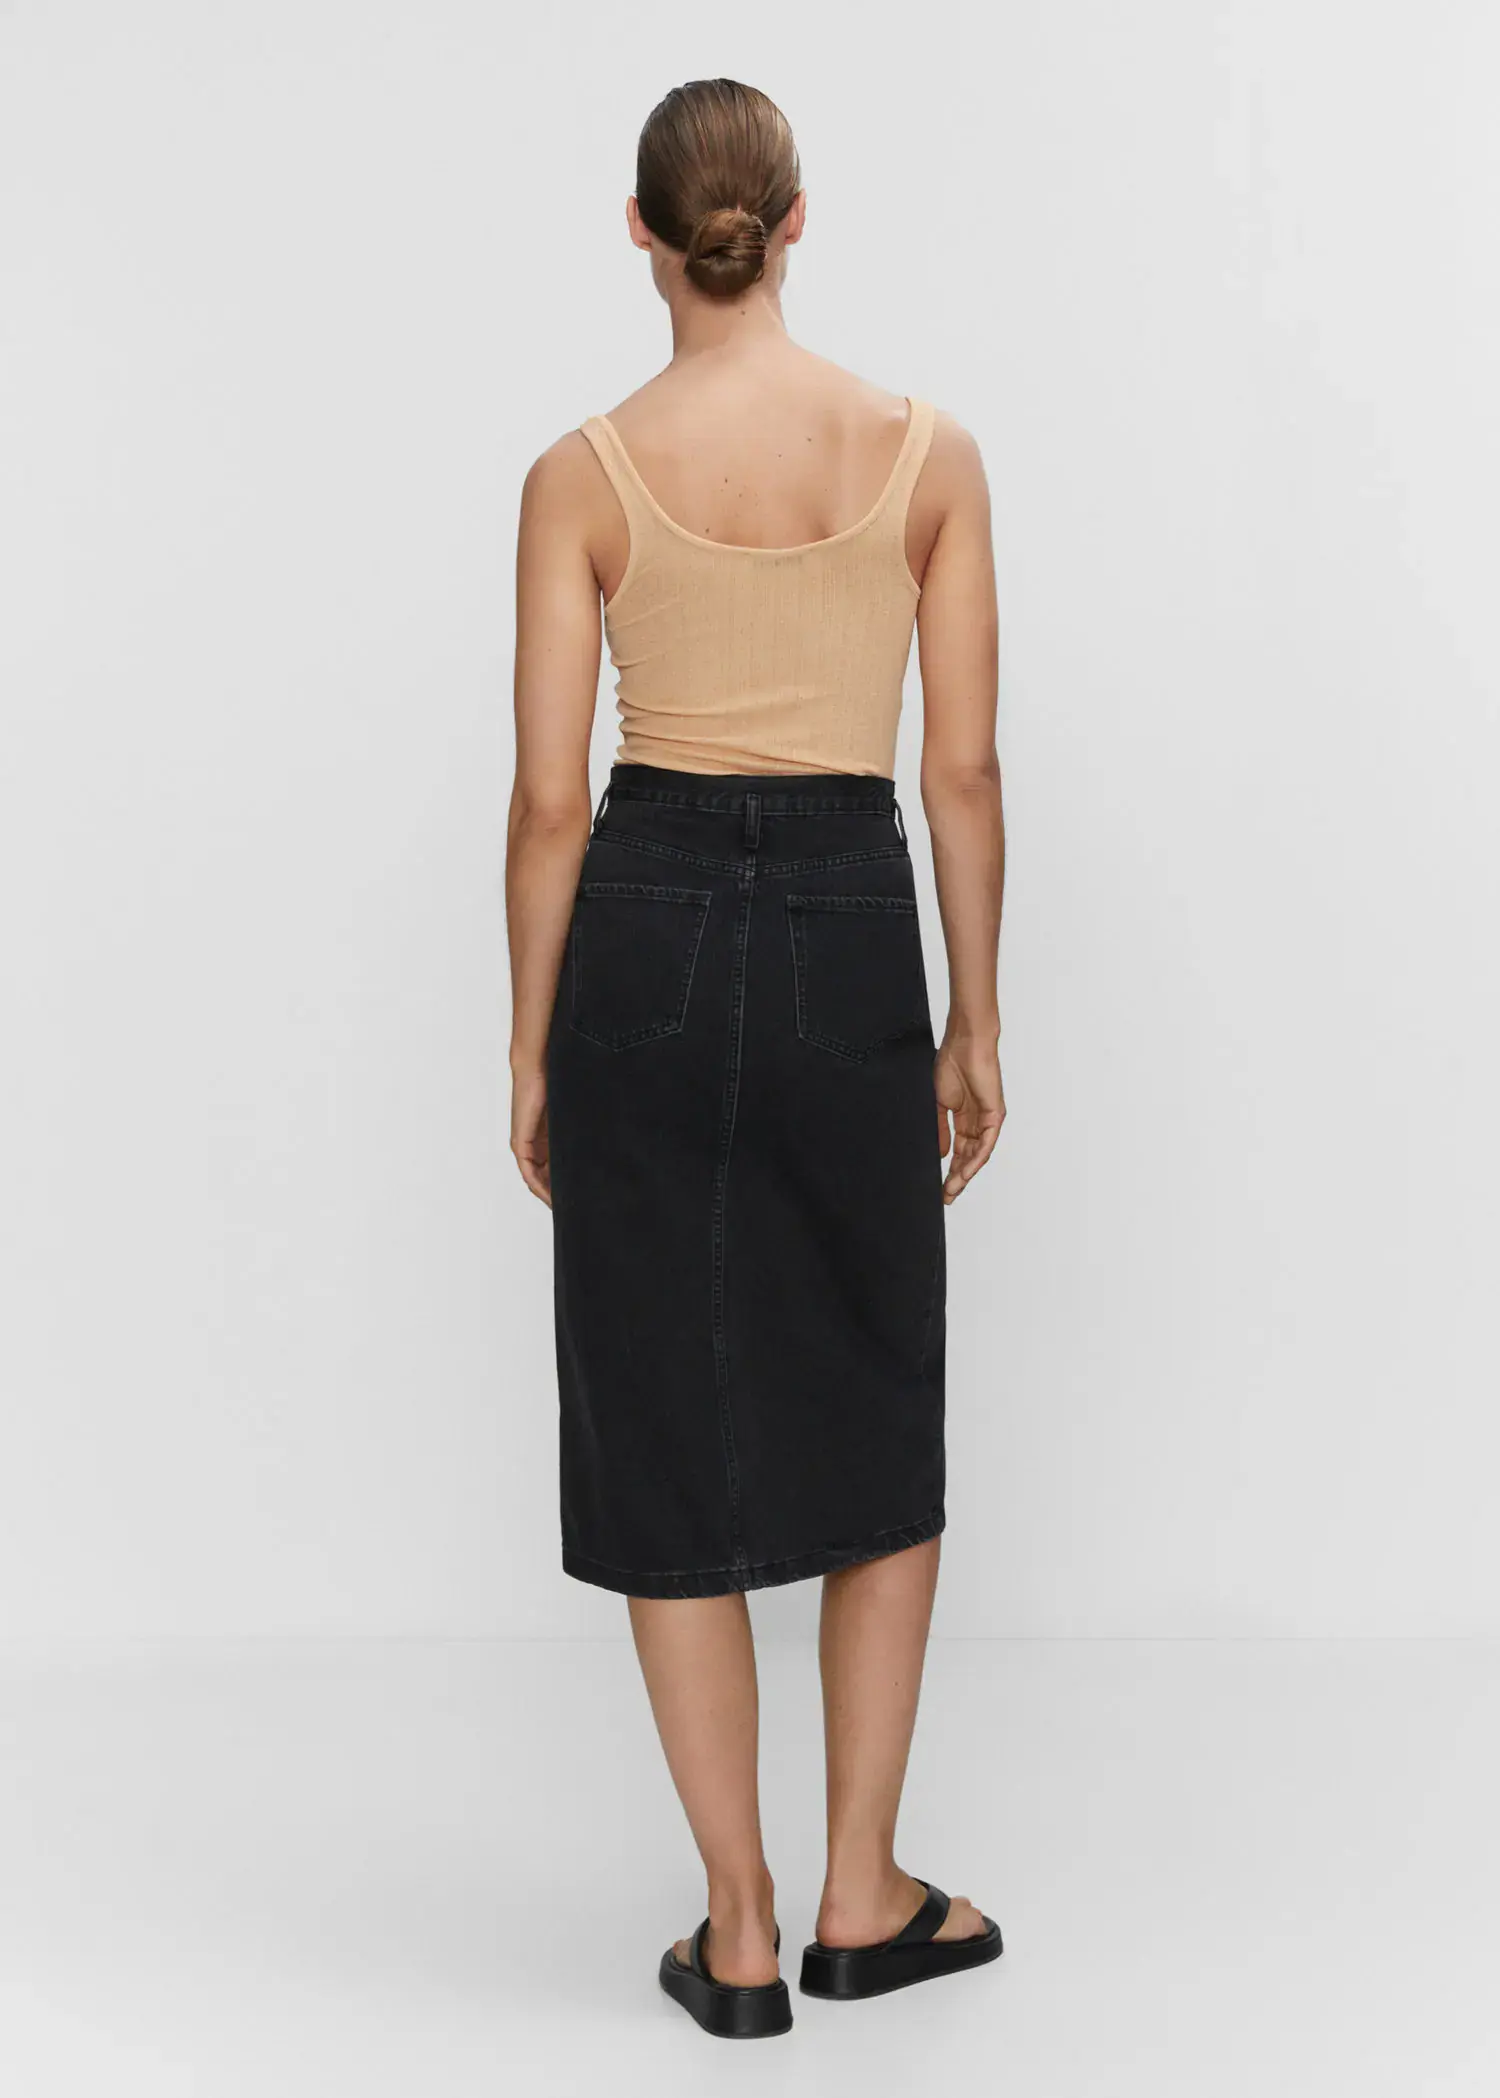 Mango Denim midi-skirt. a woman wearing a tan tank top and a black skirt. 